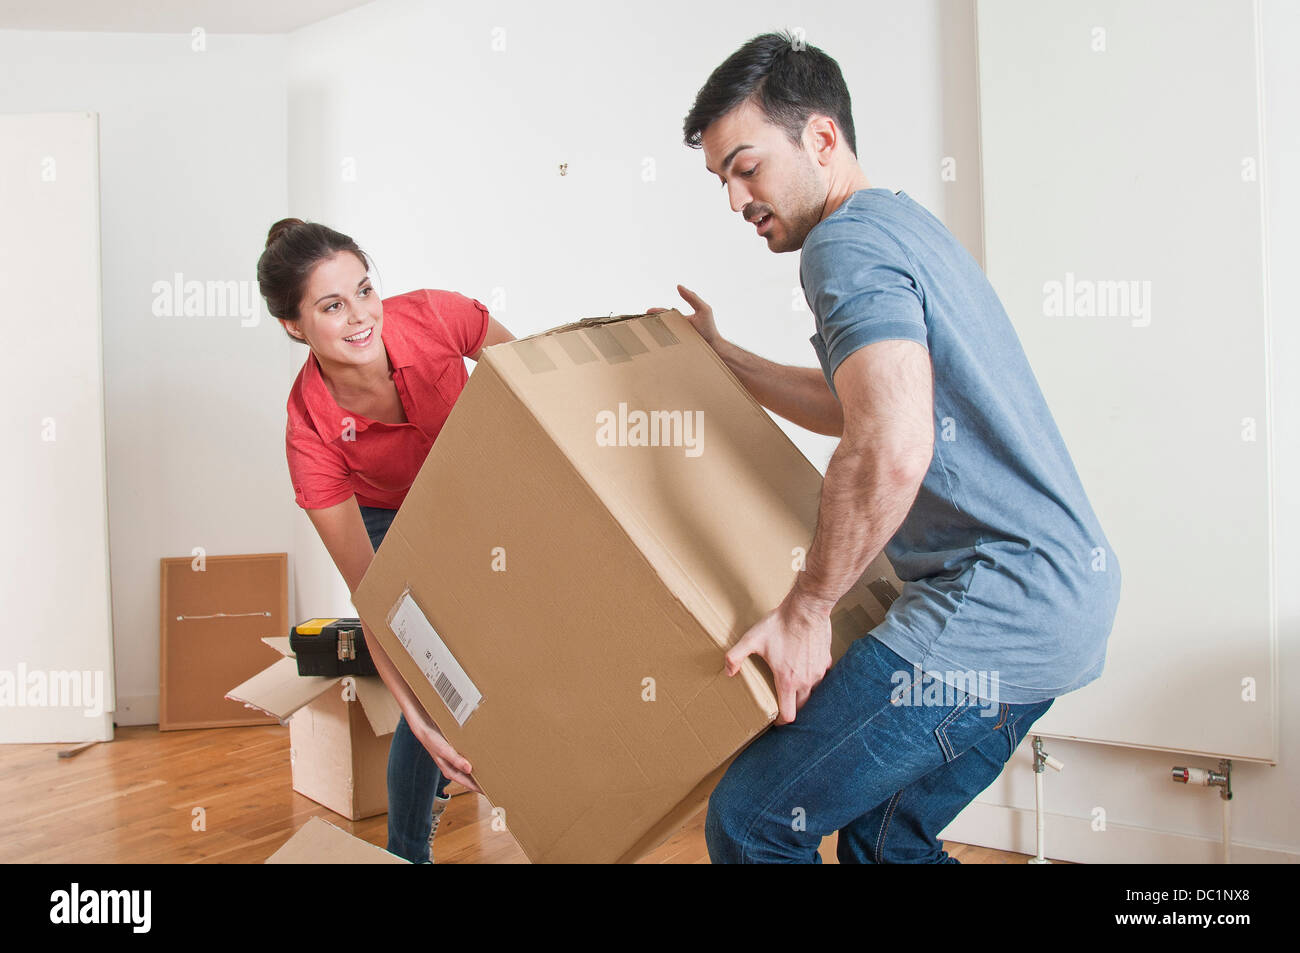 Young couple lifting cardboard box Stock Photo